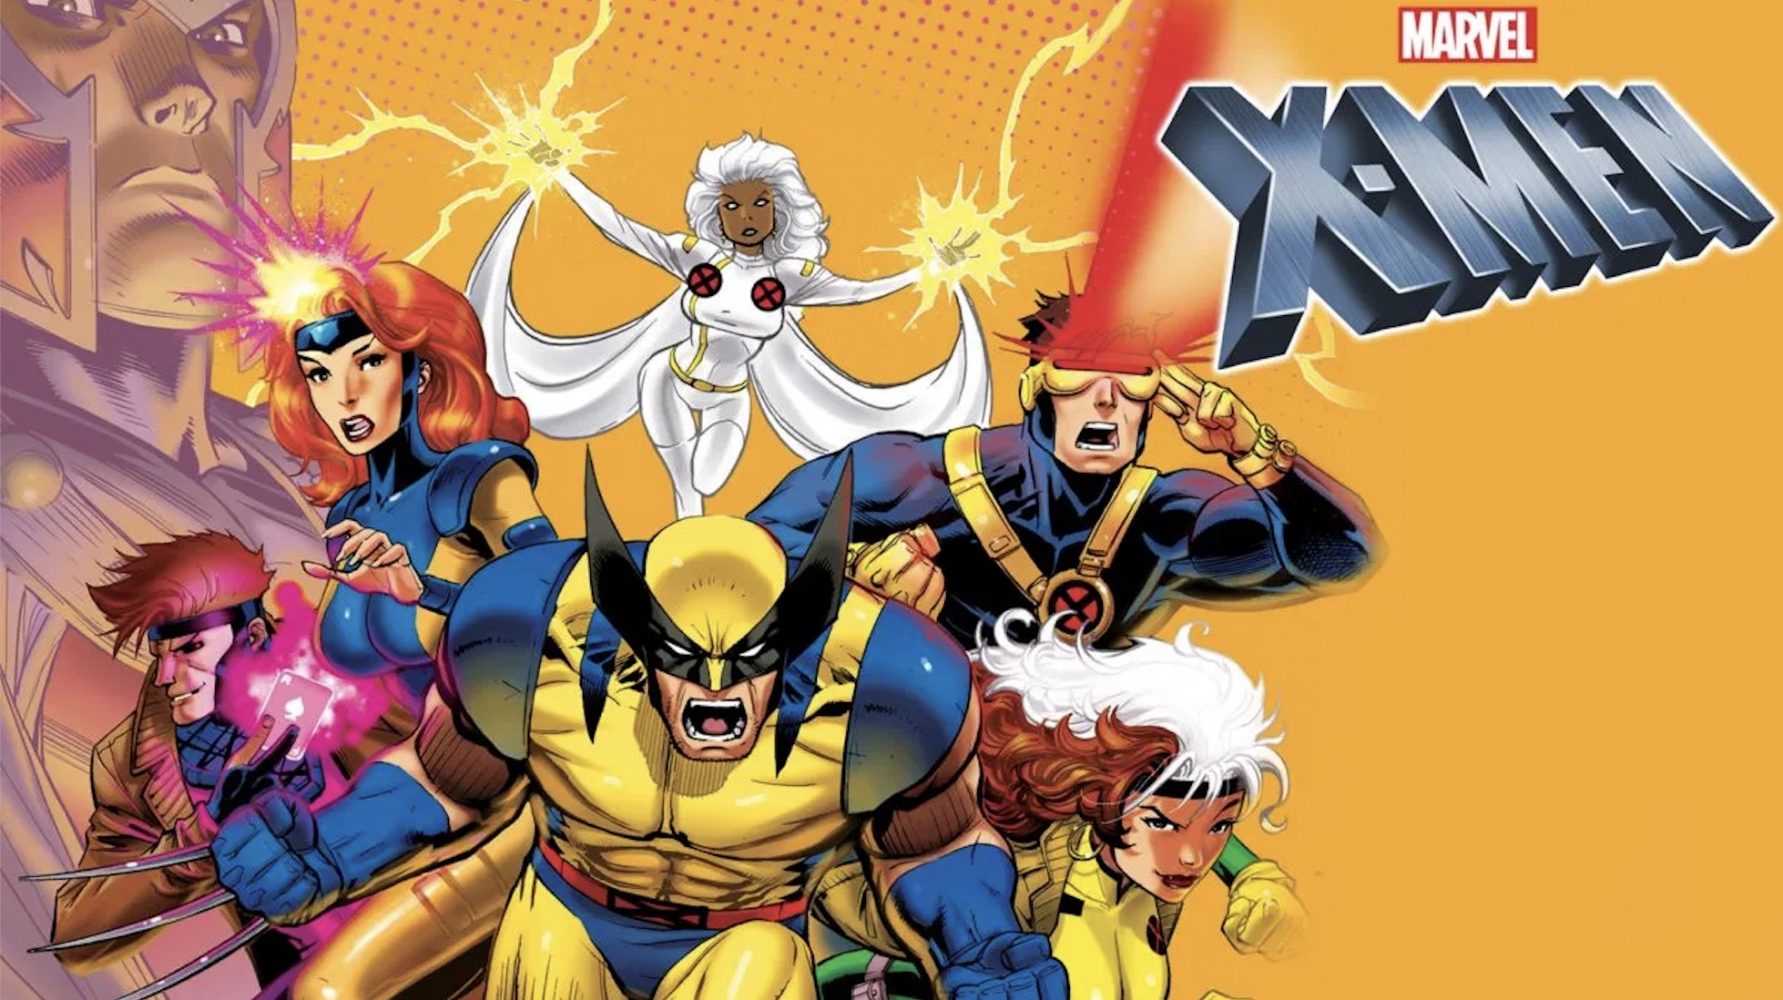 X-Men: The Animated Series (1992)